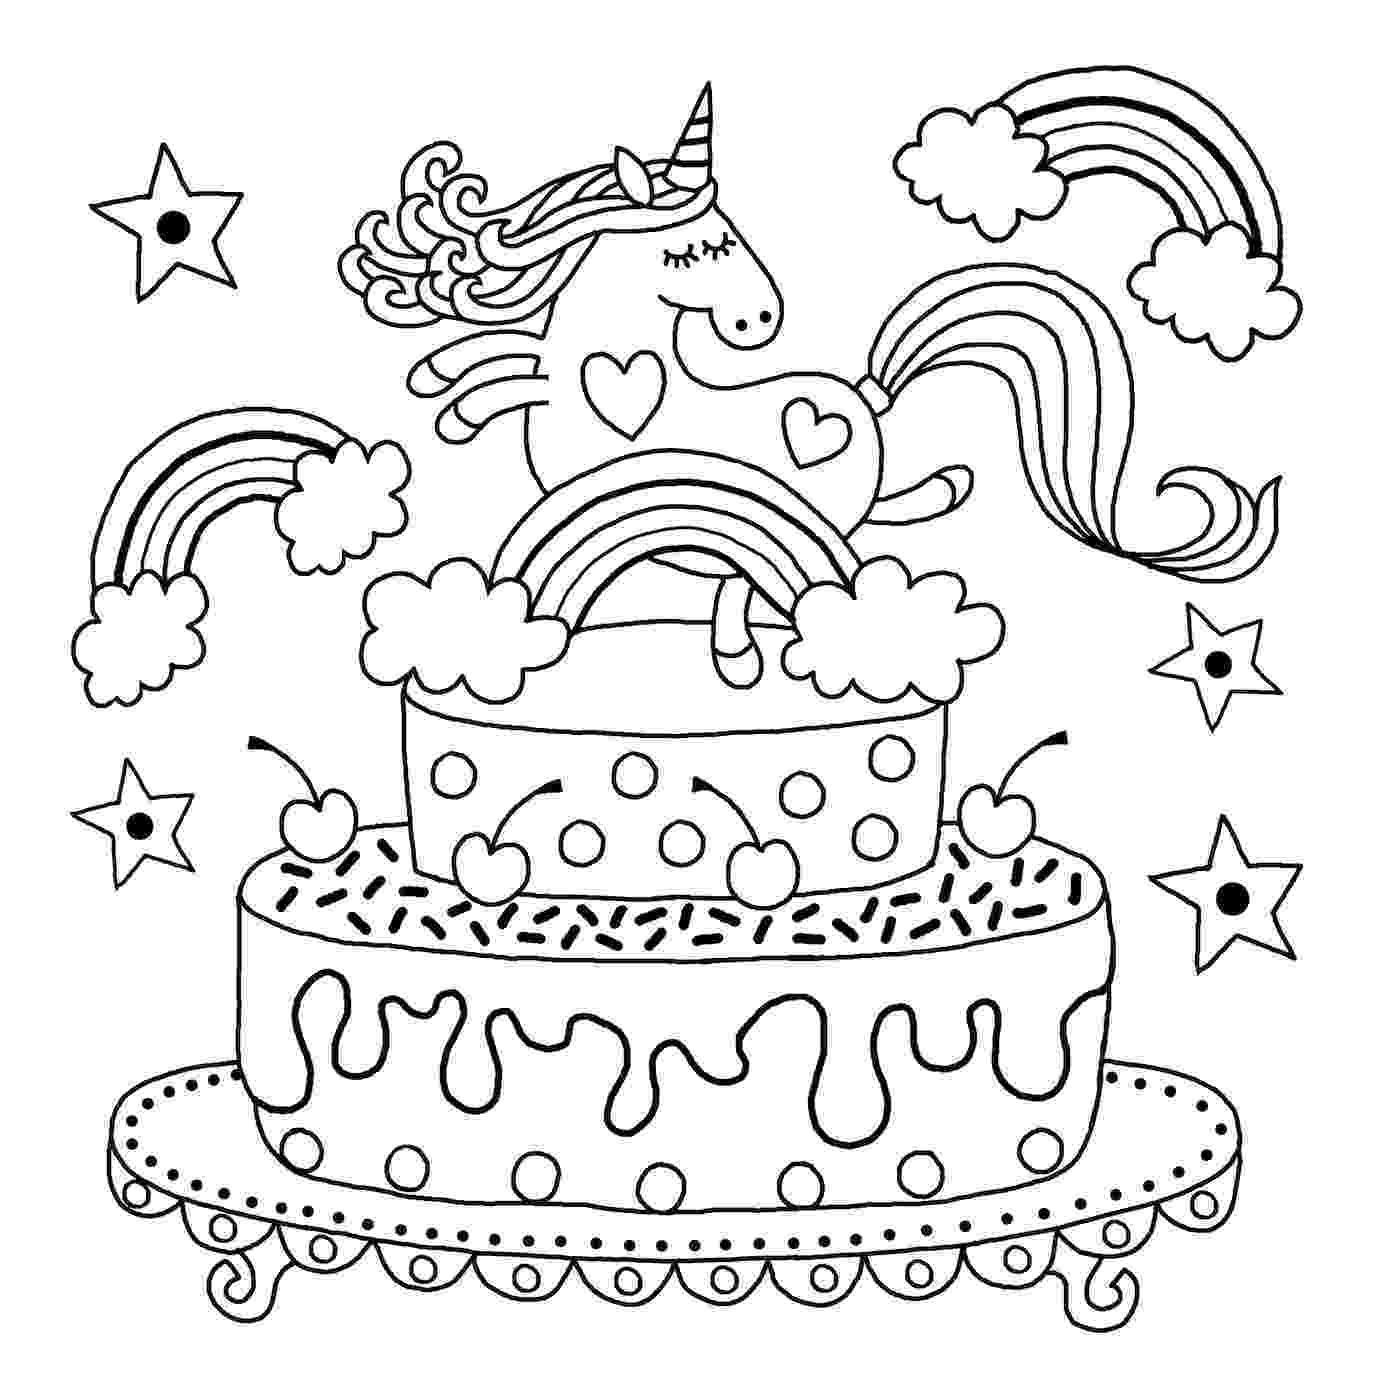 unicorn printables unicorn coloring page for kids stock illustration printables unicorn 